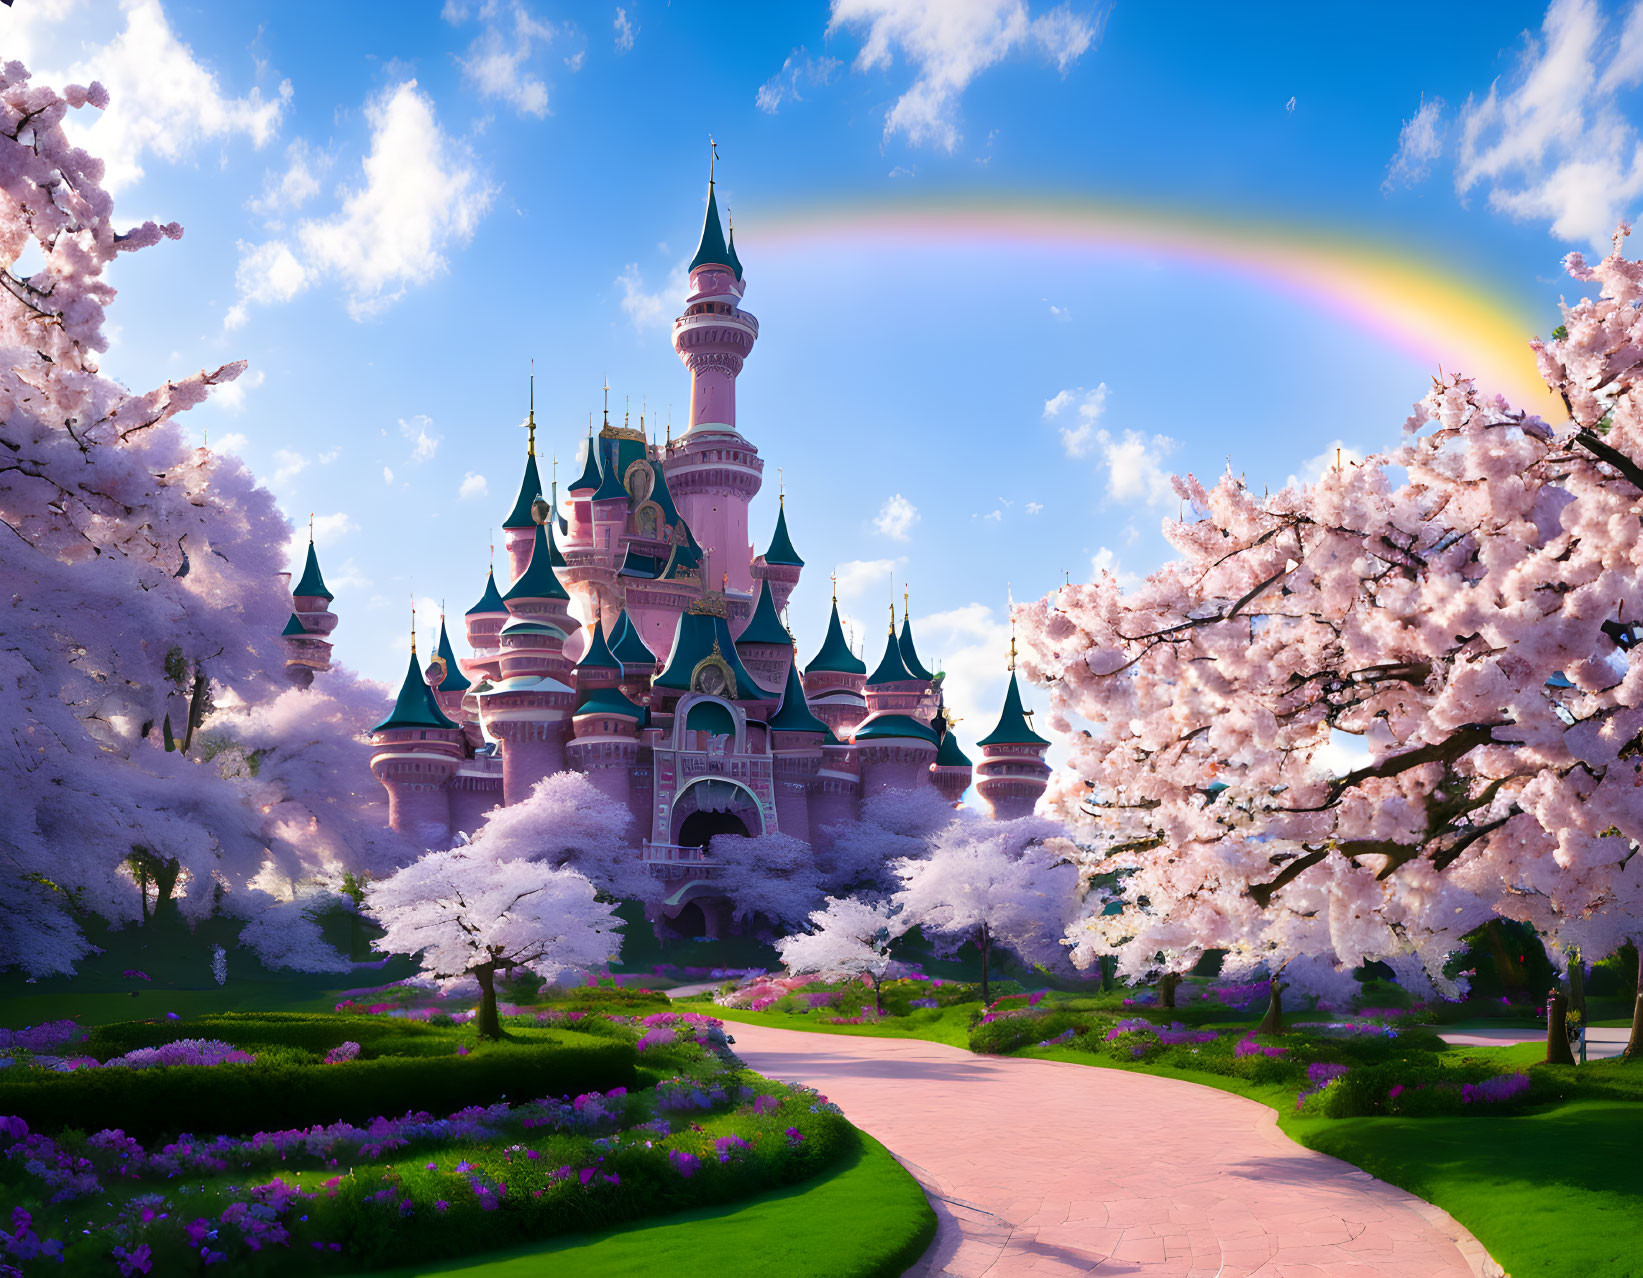 Fairytale castle with cherry trees and rainbow in blue sky